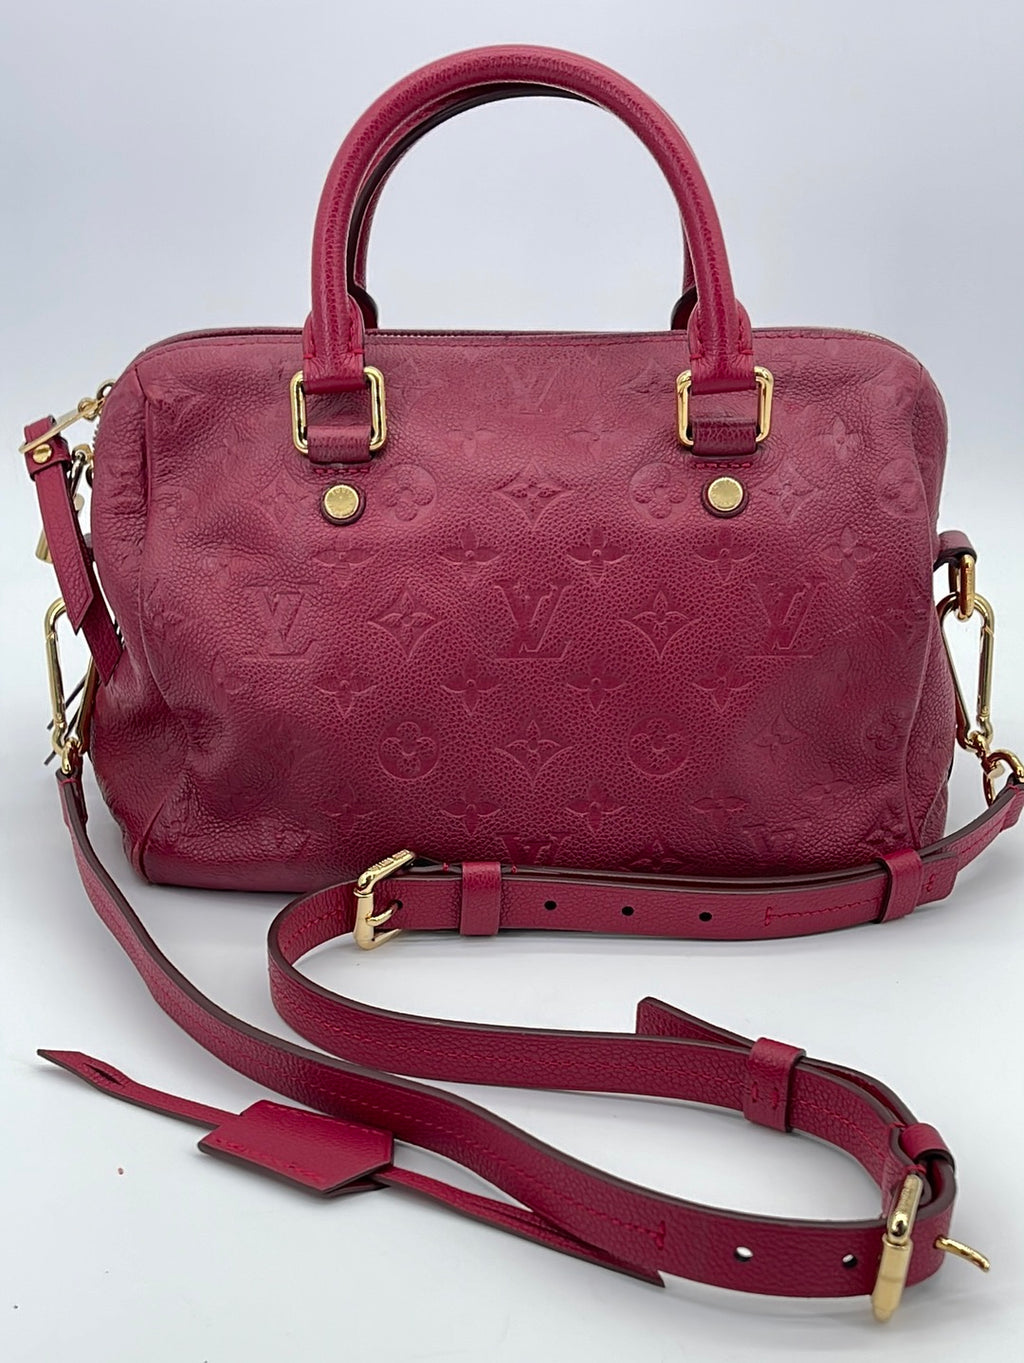 Vintage Louis Vuitton Monogram Jeune Fille PM Crossbody Bag TH0940 061923  $200 OFF NO ADDITIONAL DISCOUNTS